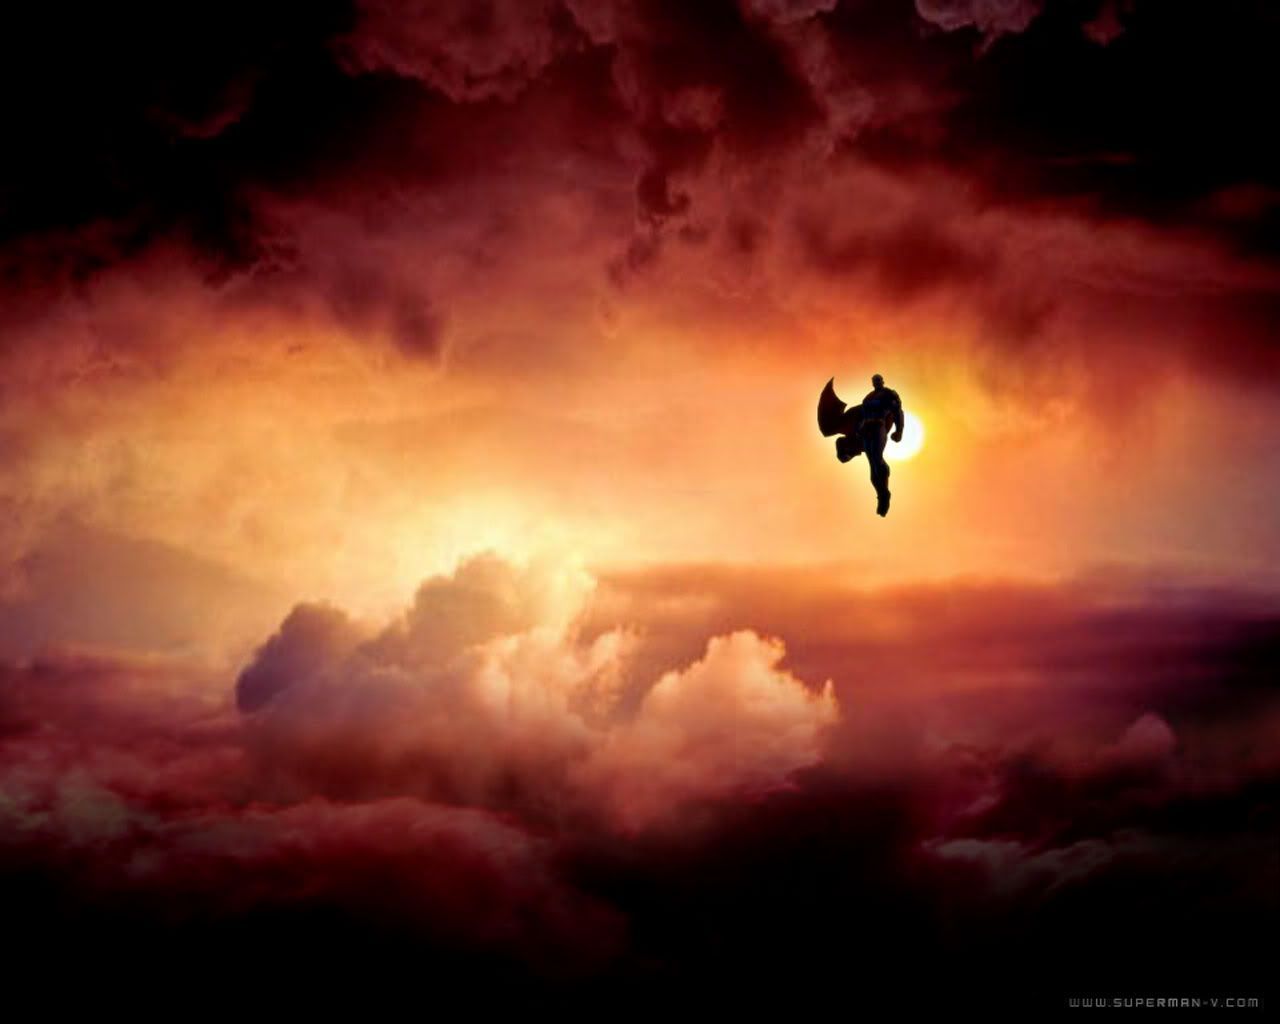 Superman, Hdq Cover Photo, Eelis Hardman - Superman In The Sky - HD Wallpaper 